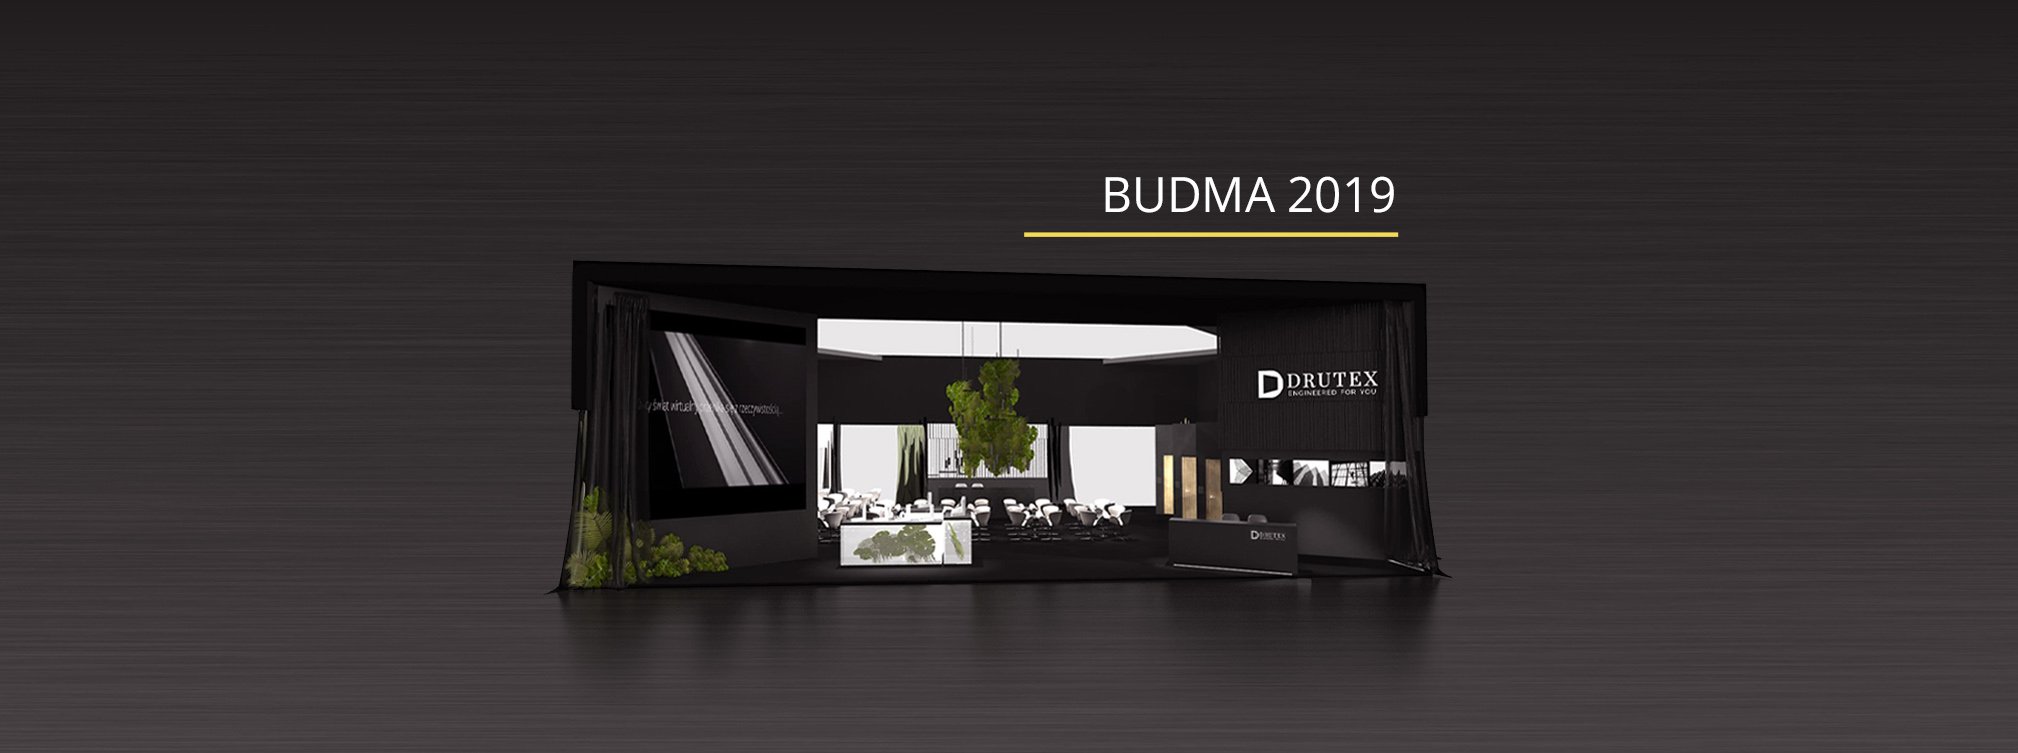 Drutex expose au salon Budma à Poznań